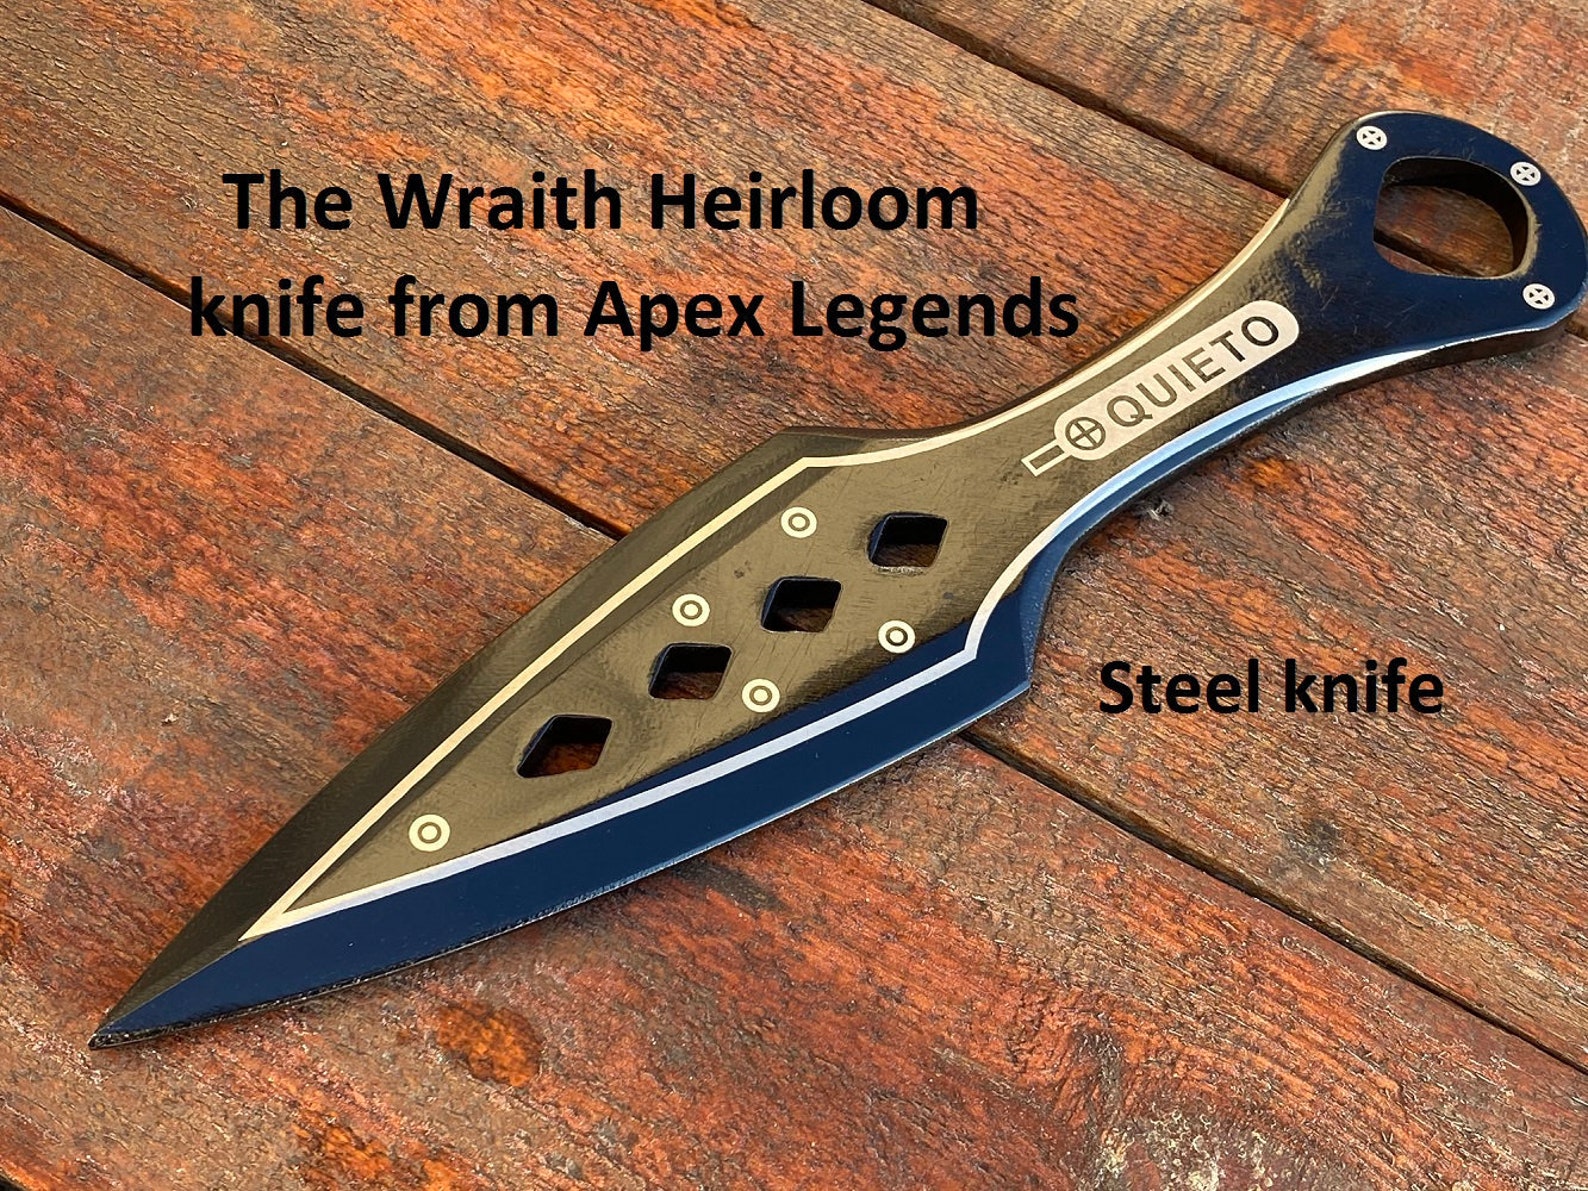 Kunai Apex Legends Wraith heirloom knife steel gift 11th image 0.